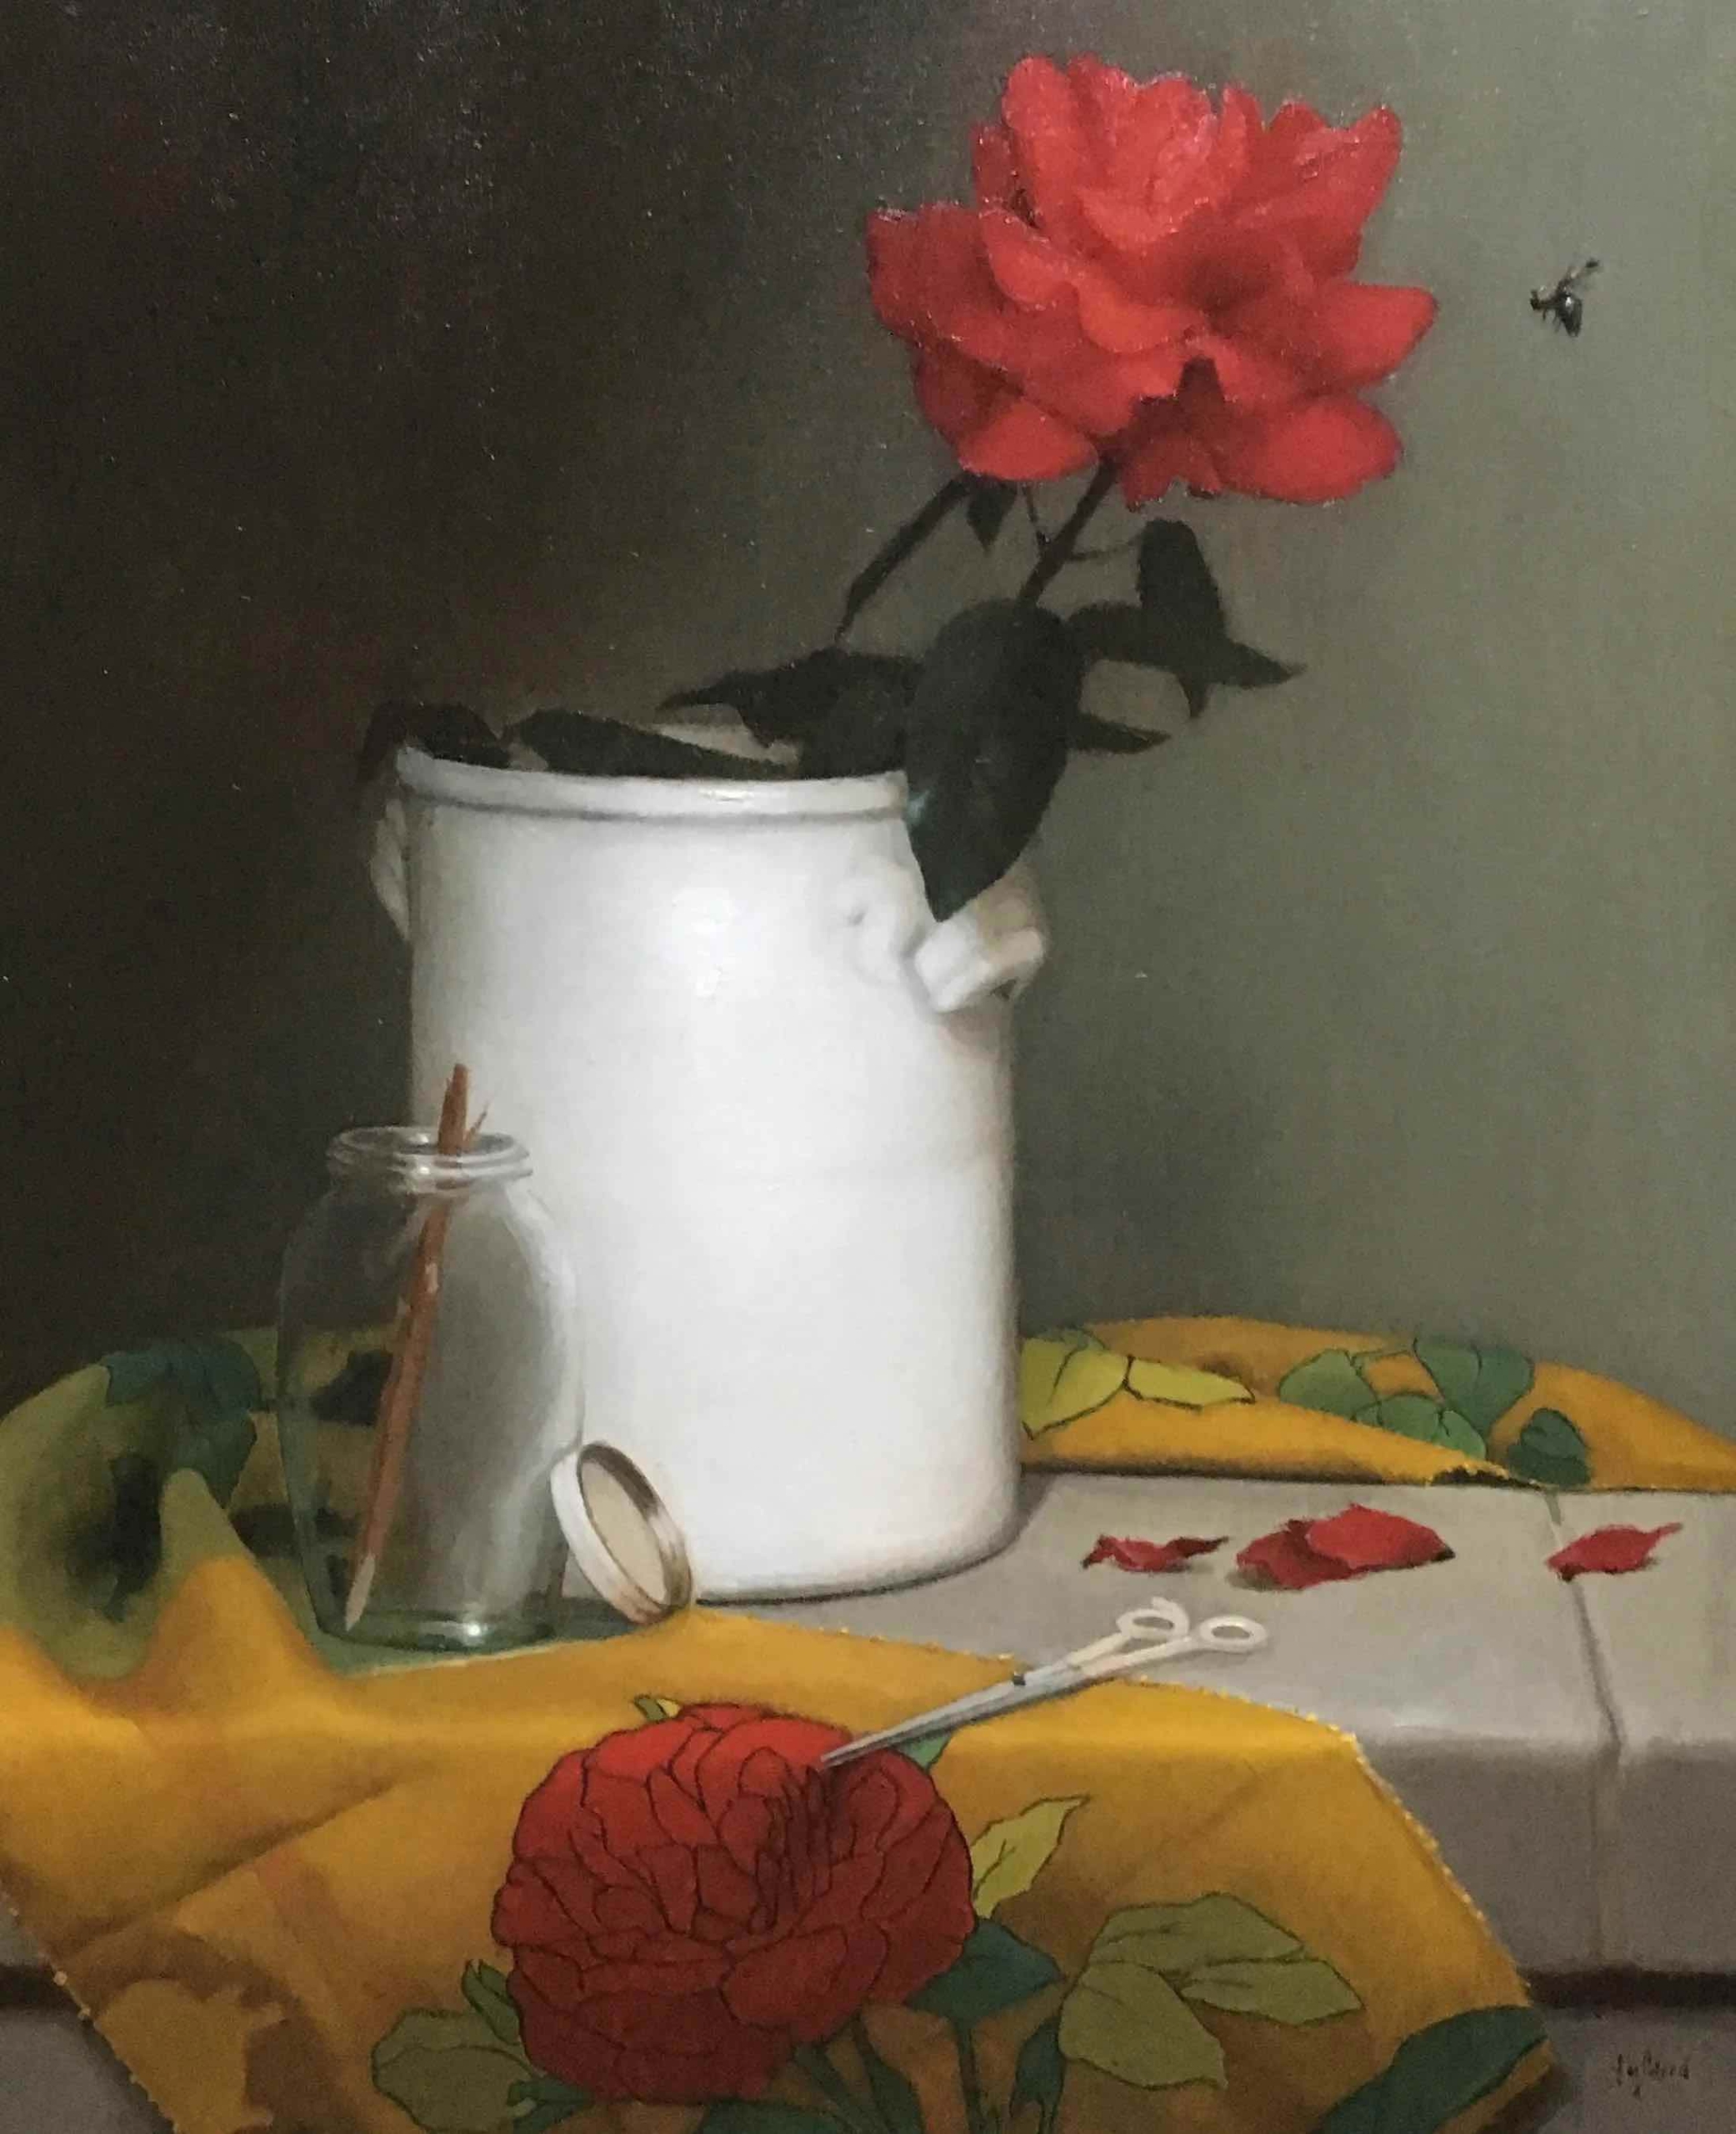 Elizabeth Beard, 'A Garden Rose,' oil on canvas, $2,000-$3,000